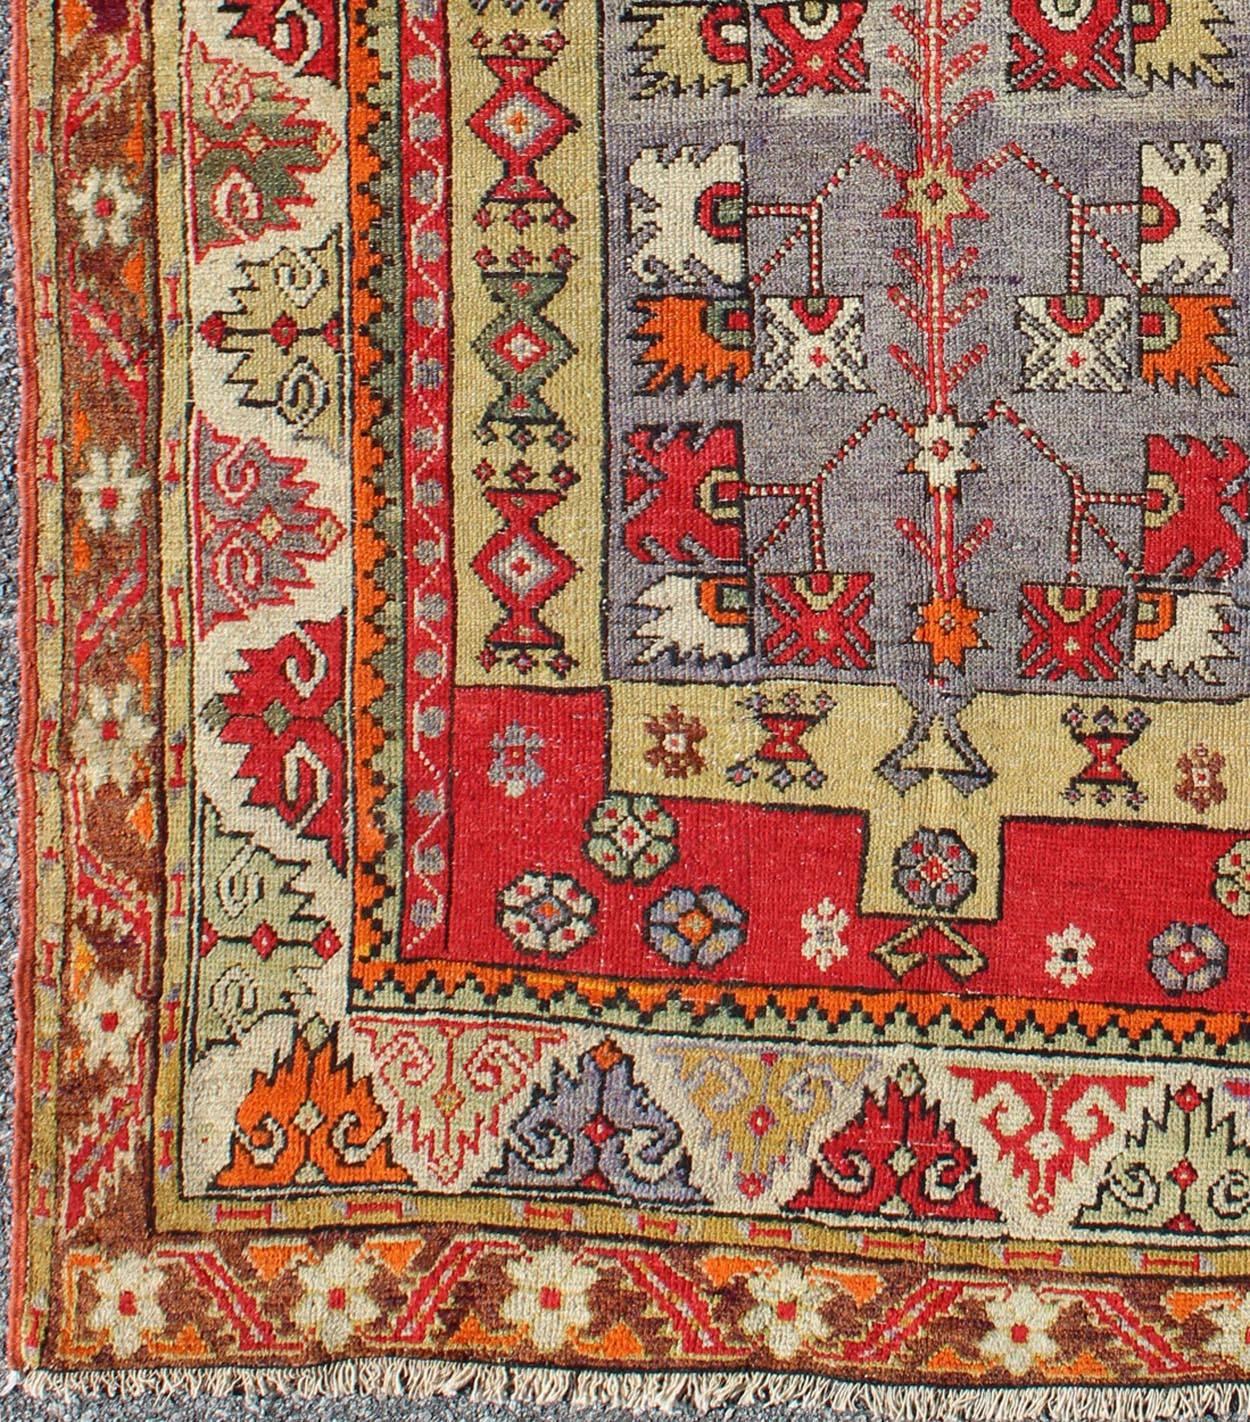 Colorful Antique Turkish Small Oushak Carpet in Multi Layered Design.

Measures: 3'7 x 5'3

Turkish colorful Oushak Antique Carpet with Unique Blend of Colors. Keivan Woven Arts/ rug J10-1009, Origin/turkey, Antique Oushak rug. 
   
This colorful